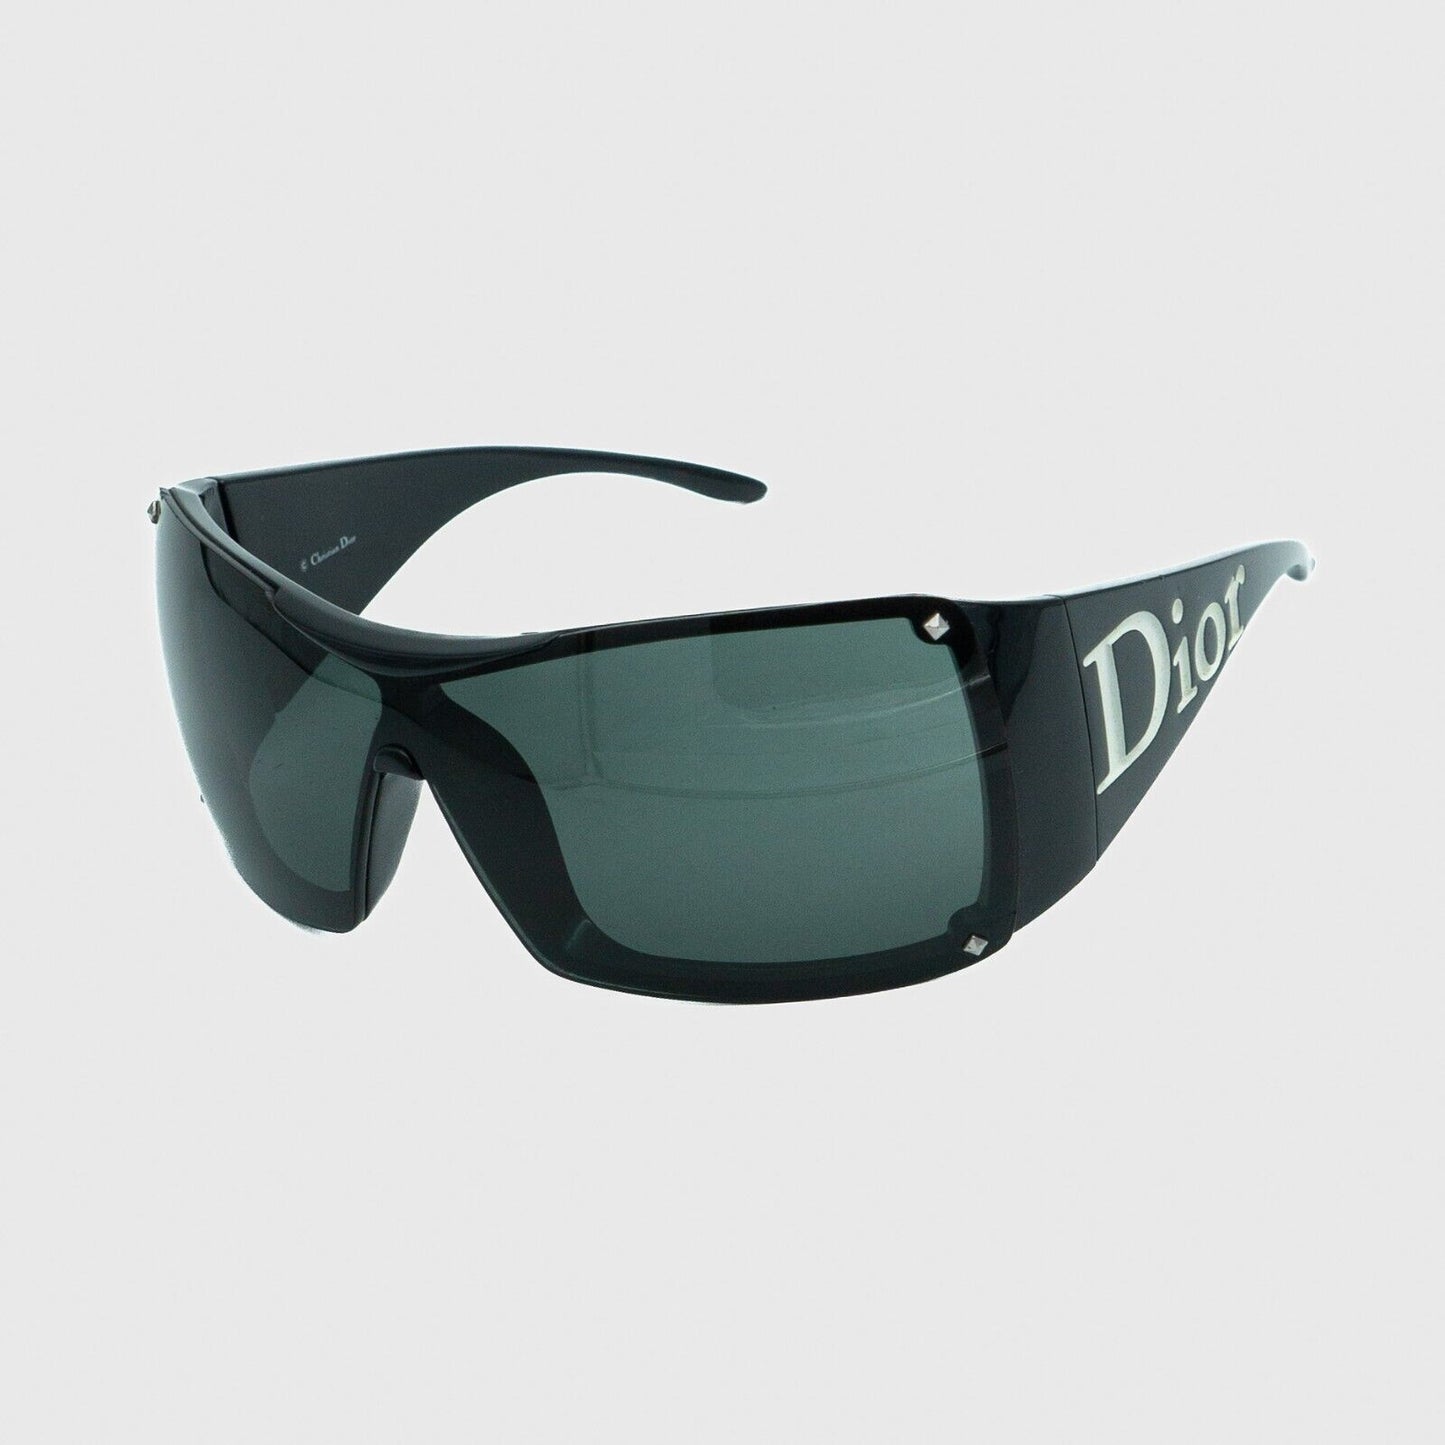 Christian DIOR OVERSHINE 2 Shield Mask Black Sunglasses Vintage 90s 00s